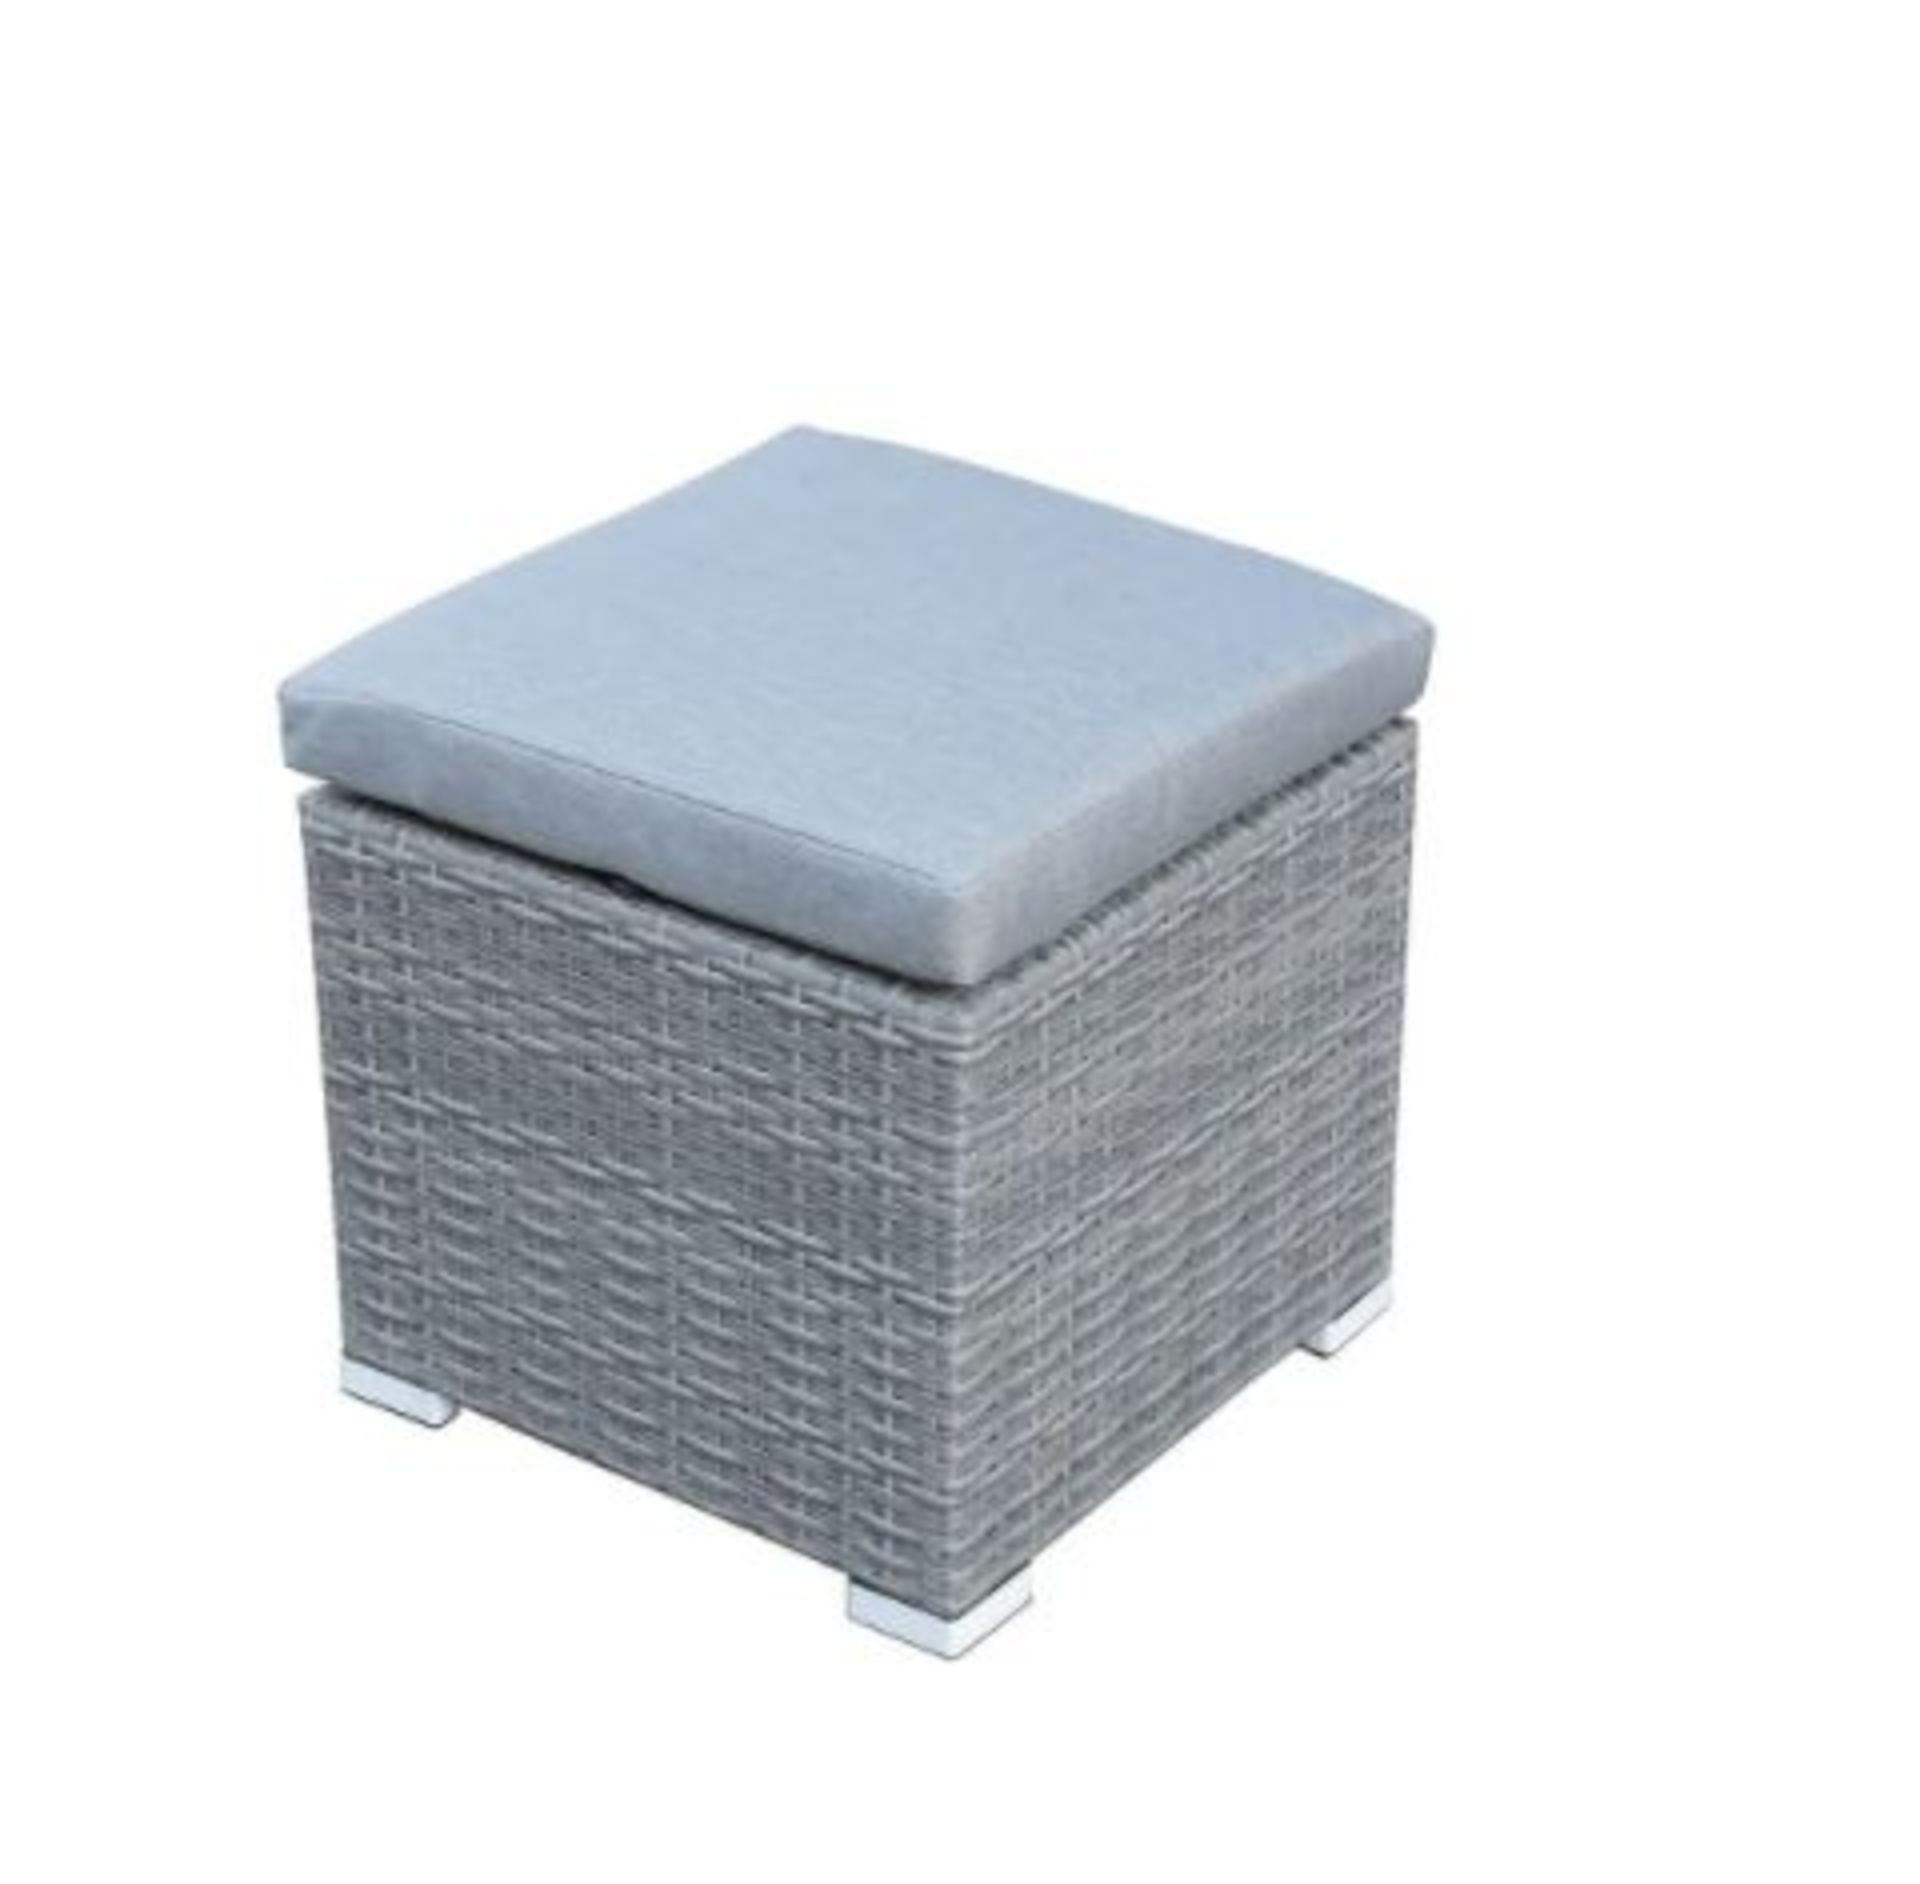 1x Bambrick Cube. 8 Seater Grey Rattan Cube Garden Furniture Set. RRP £800 - Image 5 of 8